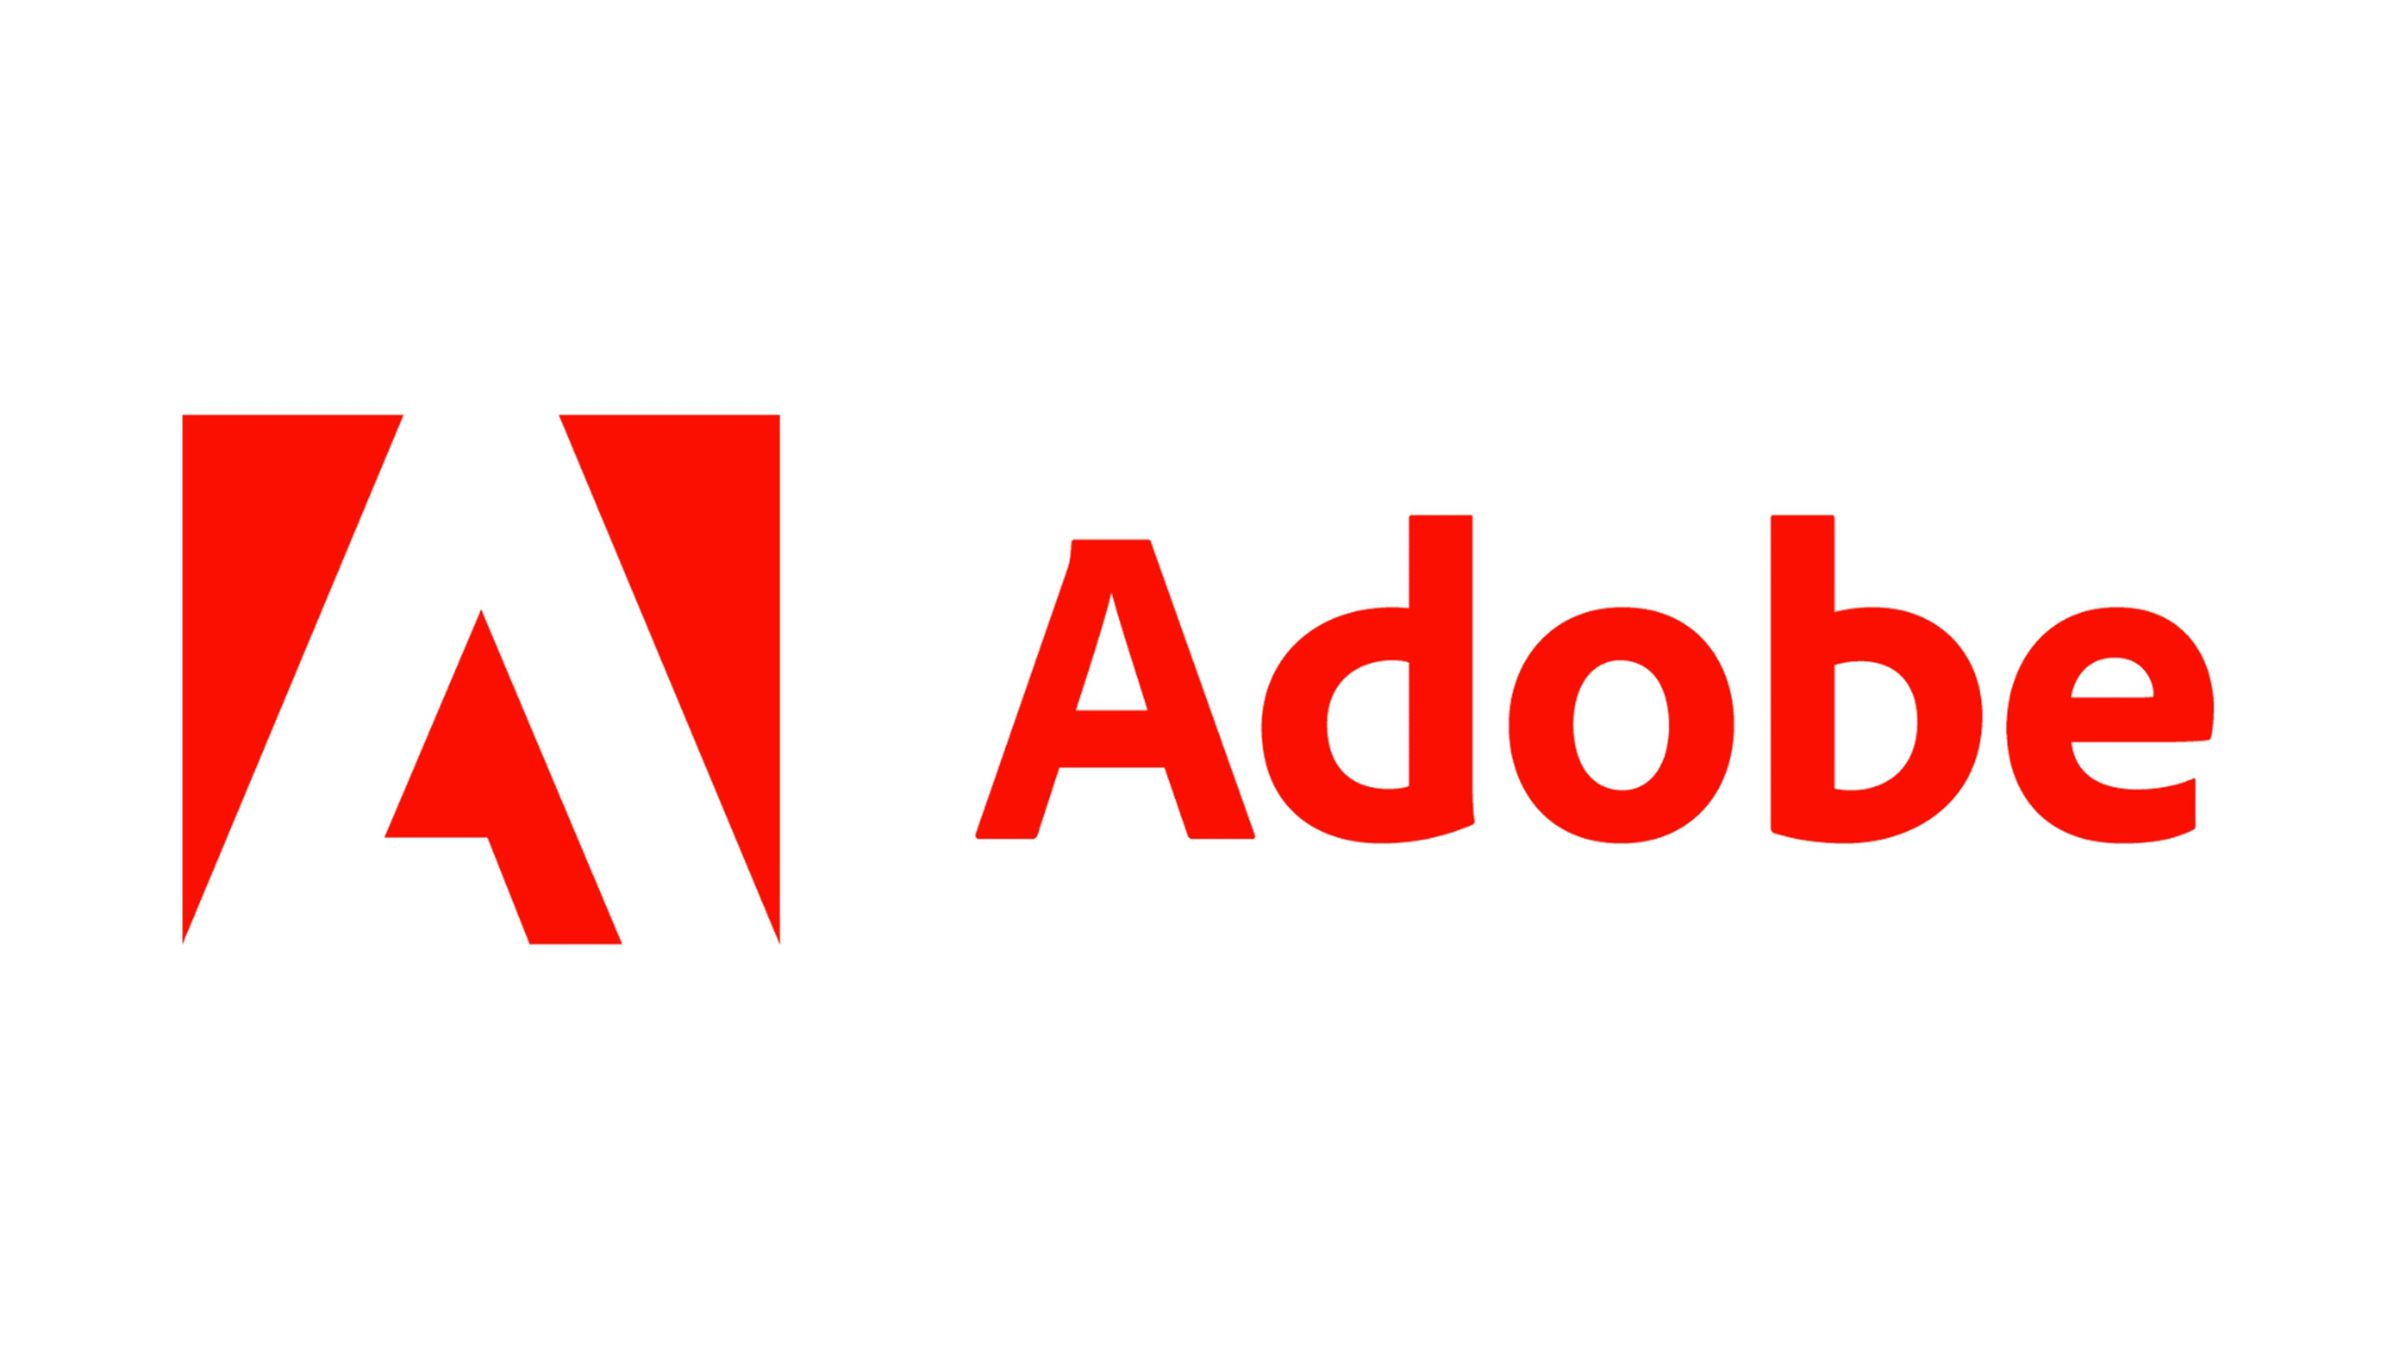 The Adobe logo on a white background